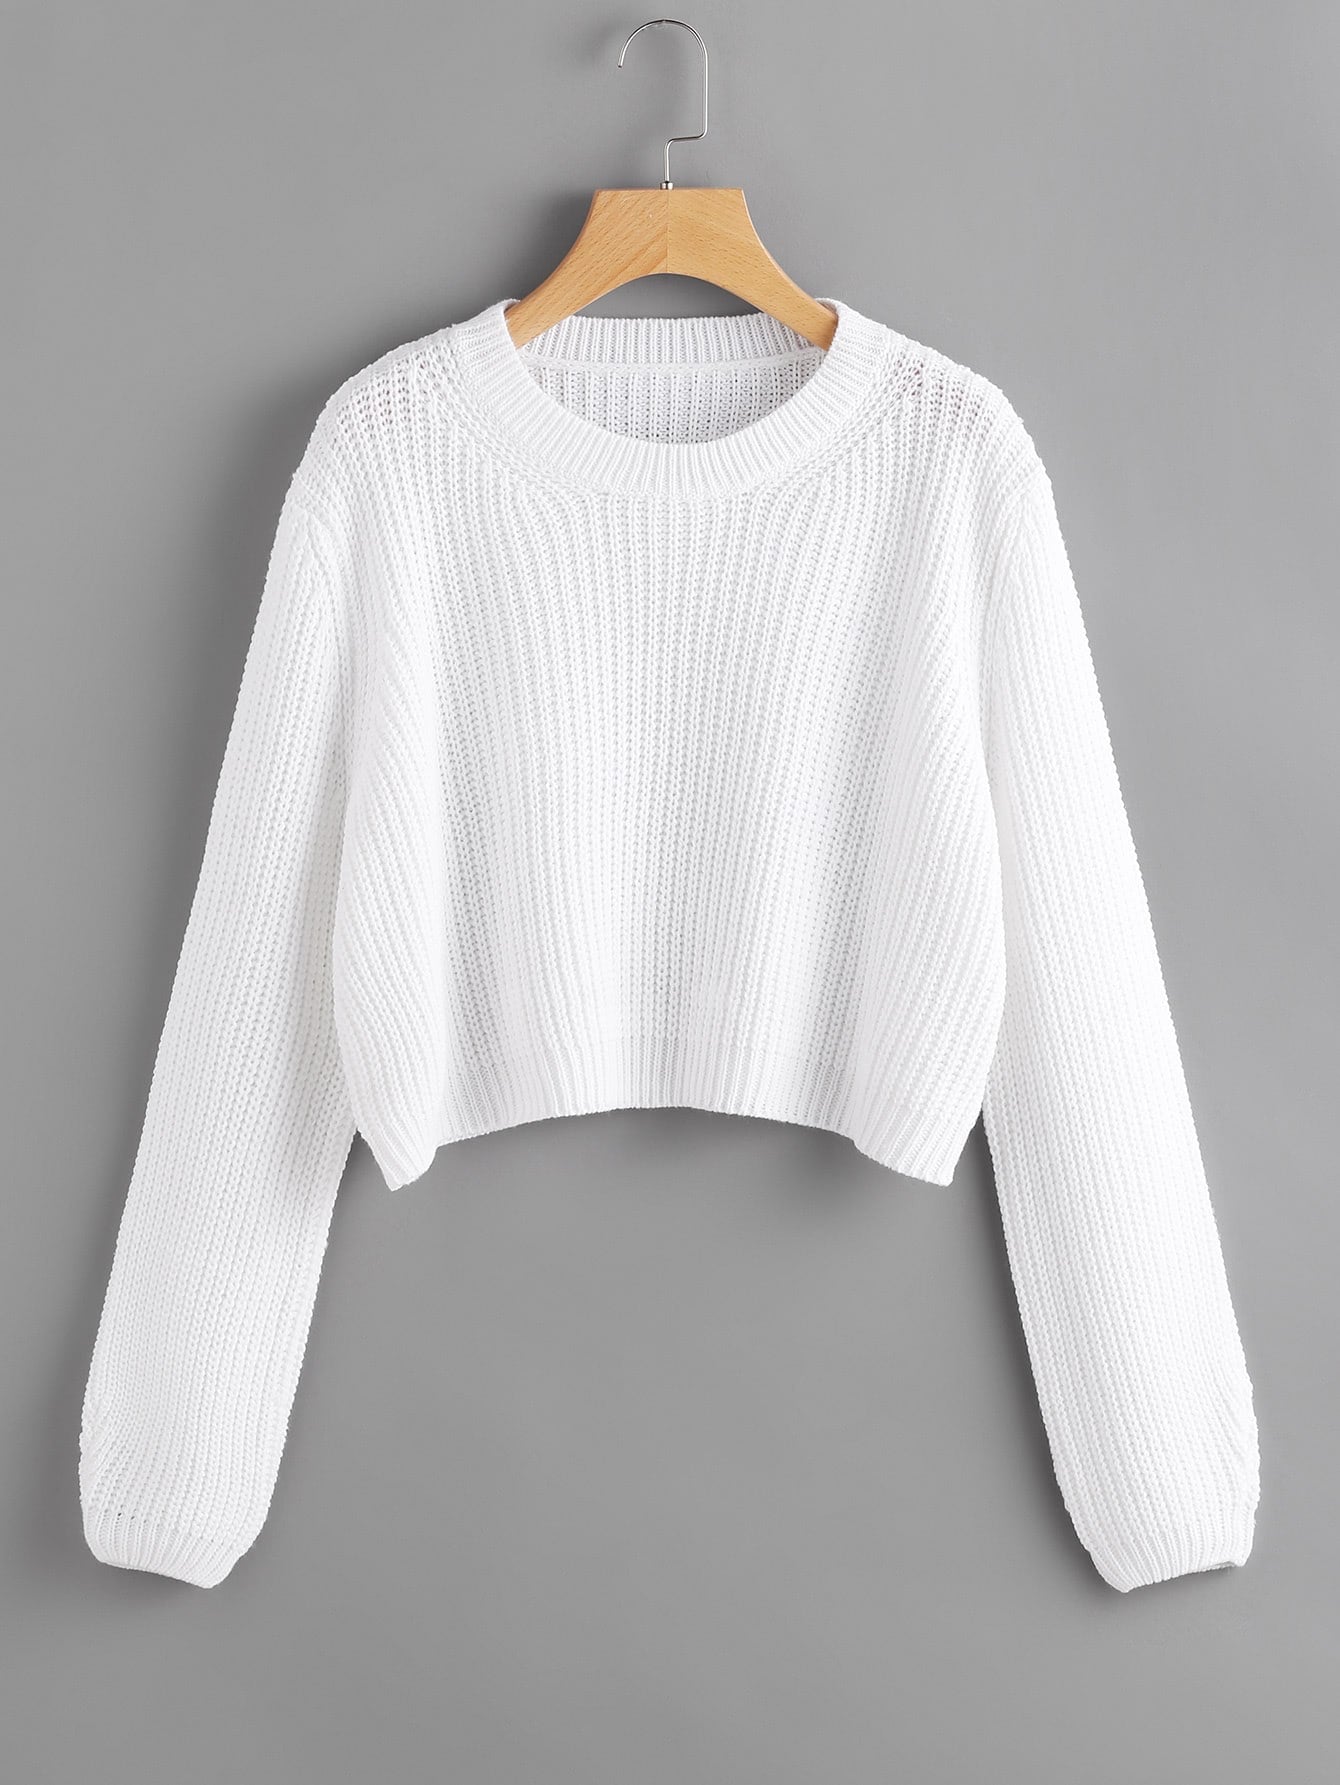 white knit sweater